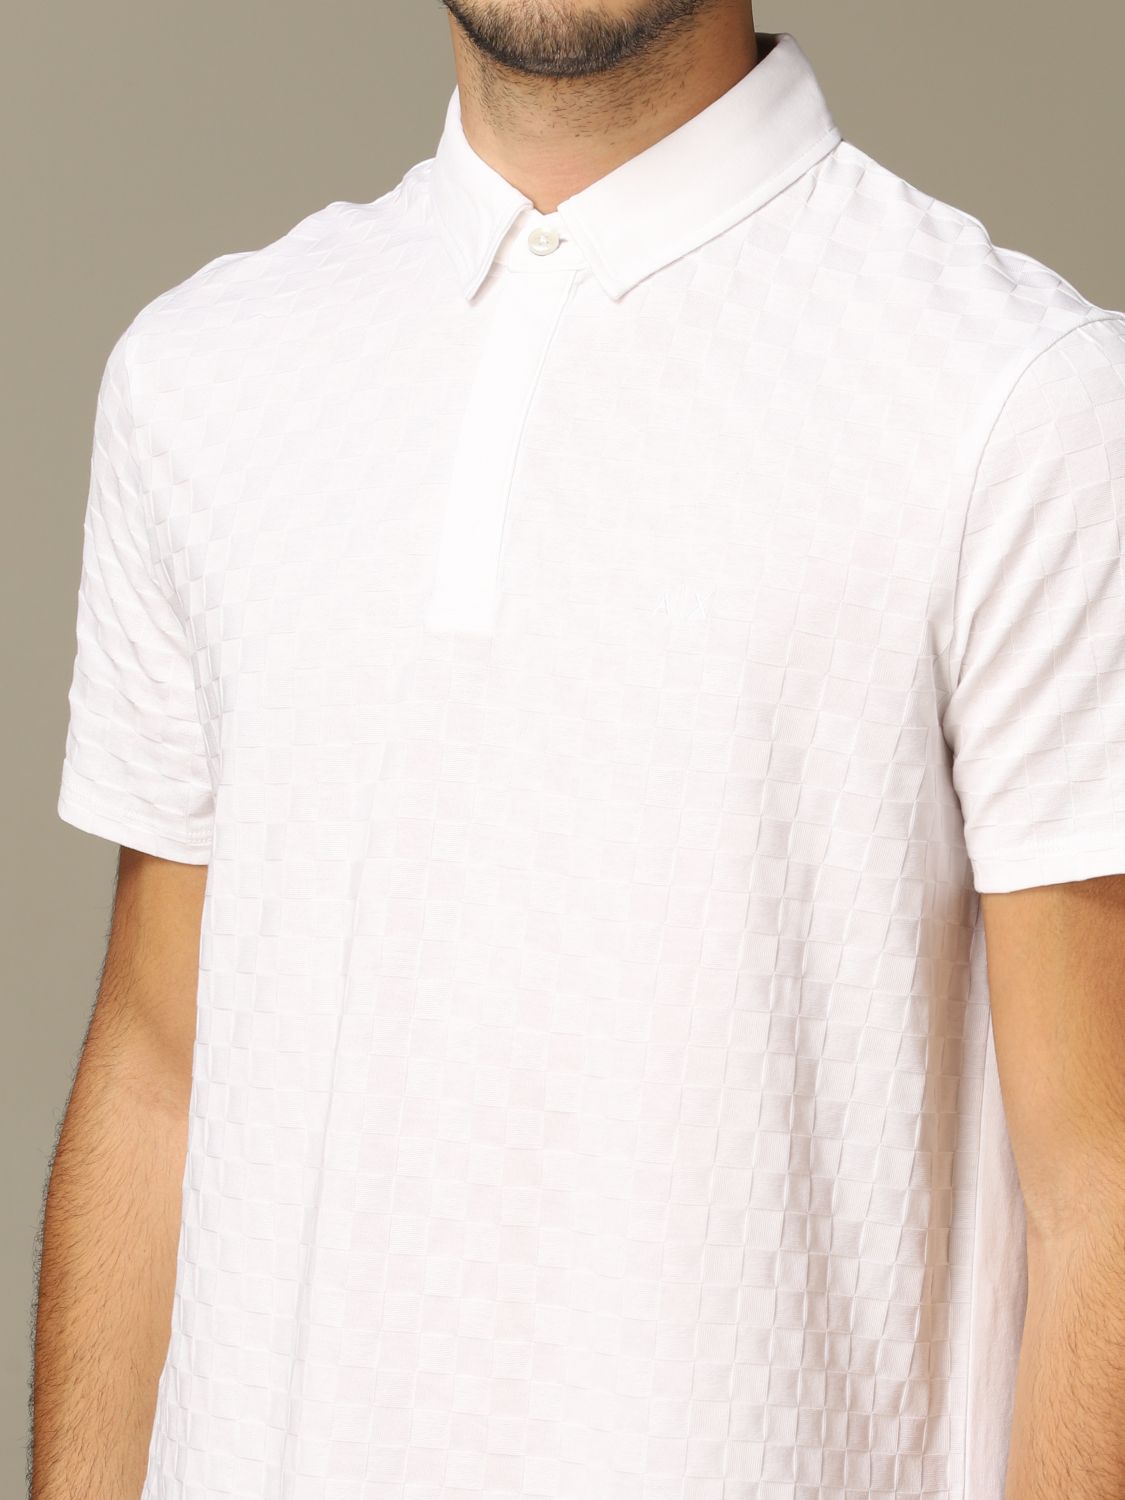 ARMANI EXCHANGE: Polo shirt men - White | Polo Shirt Armani Exchange ...